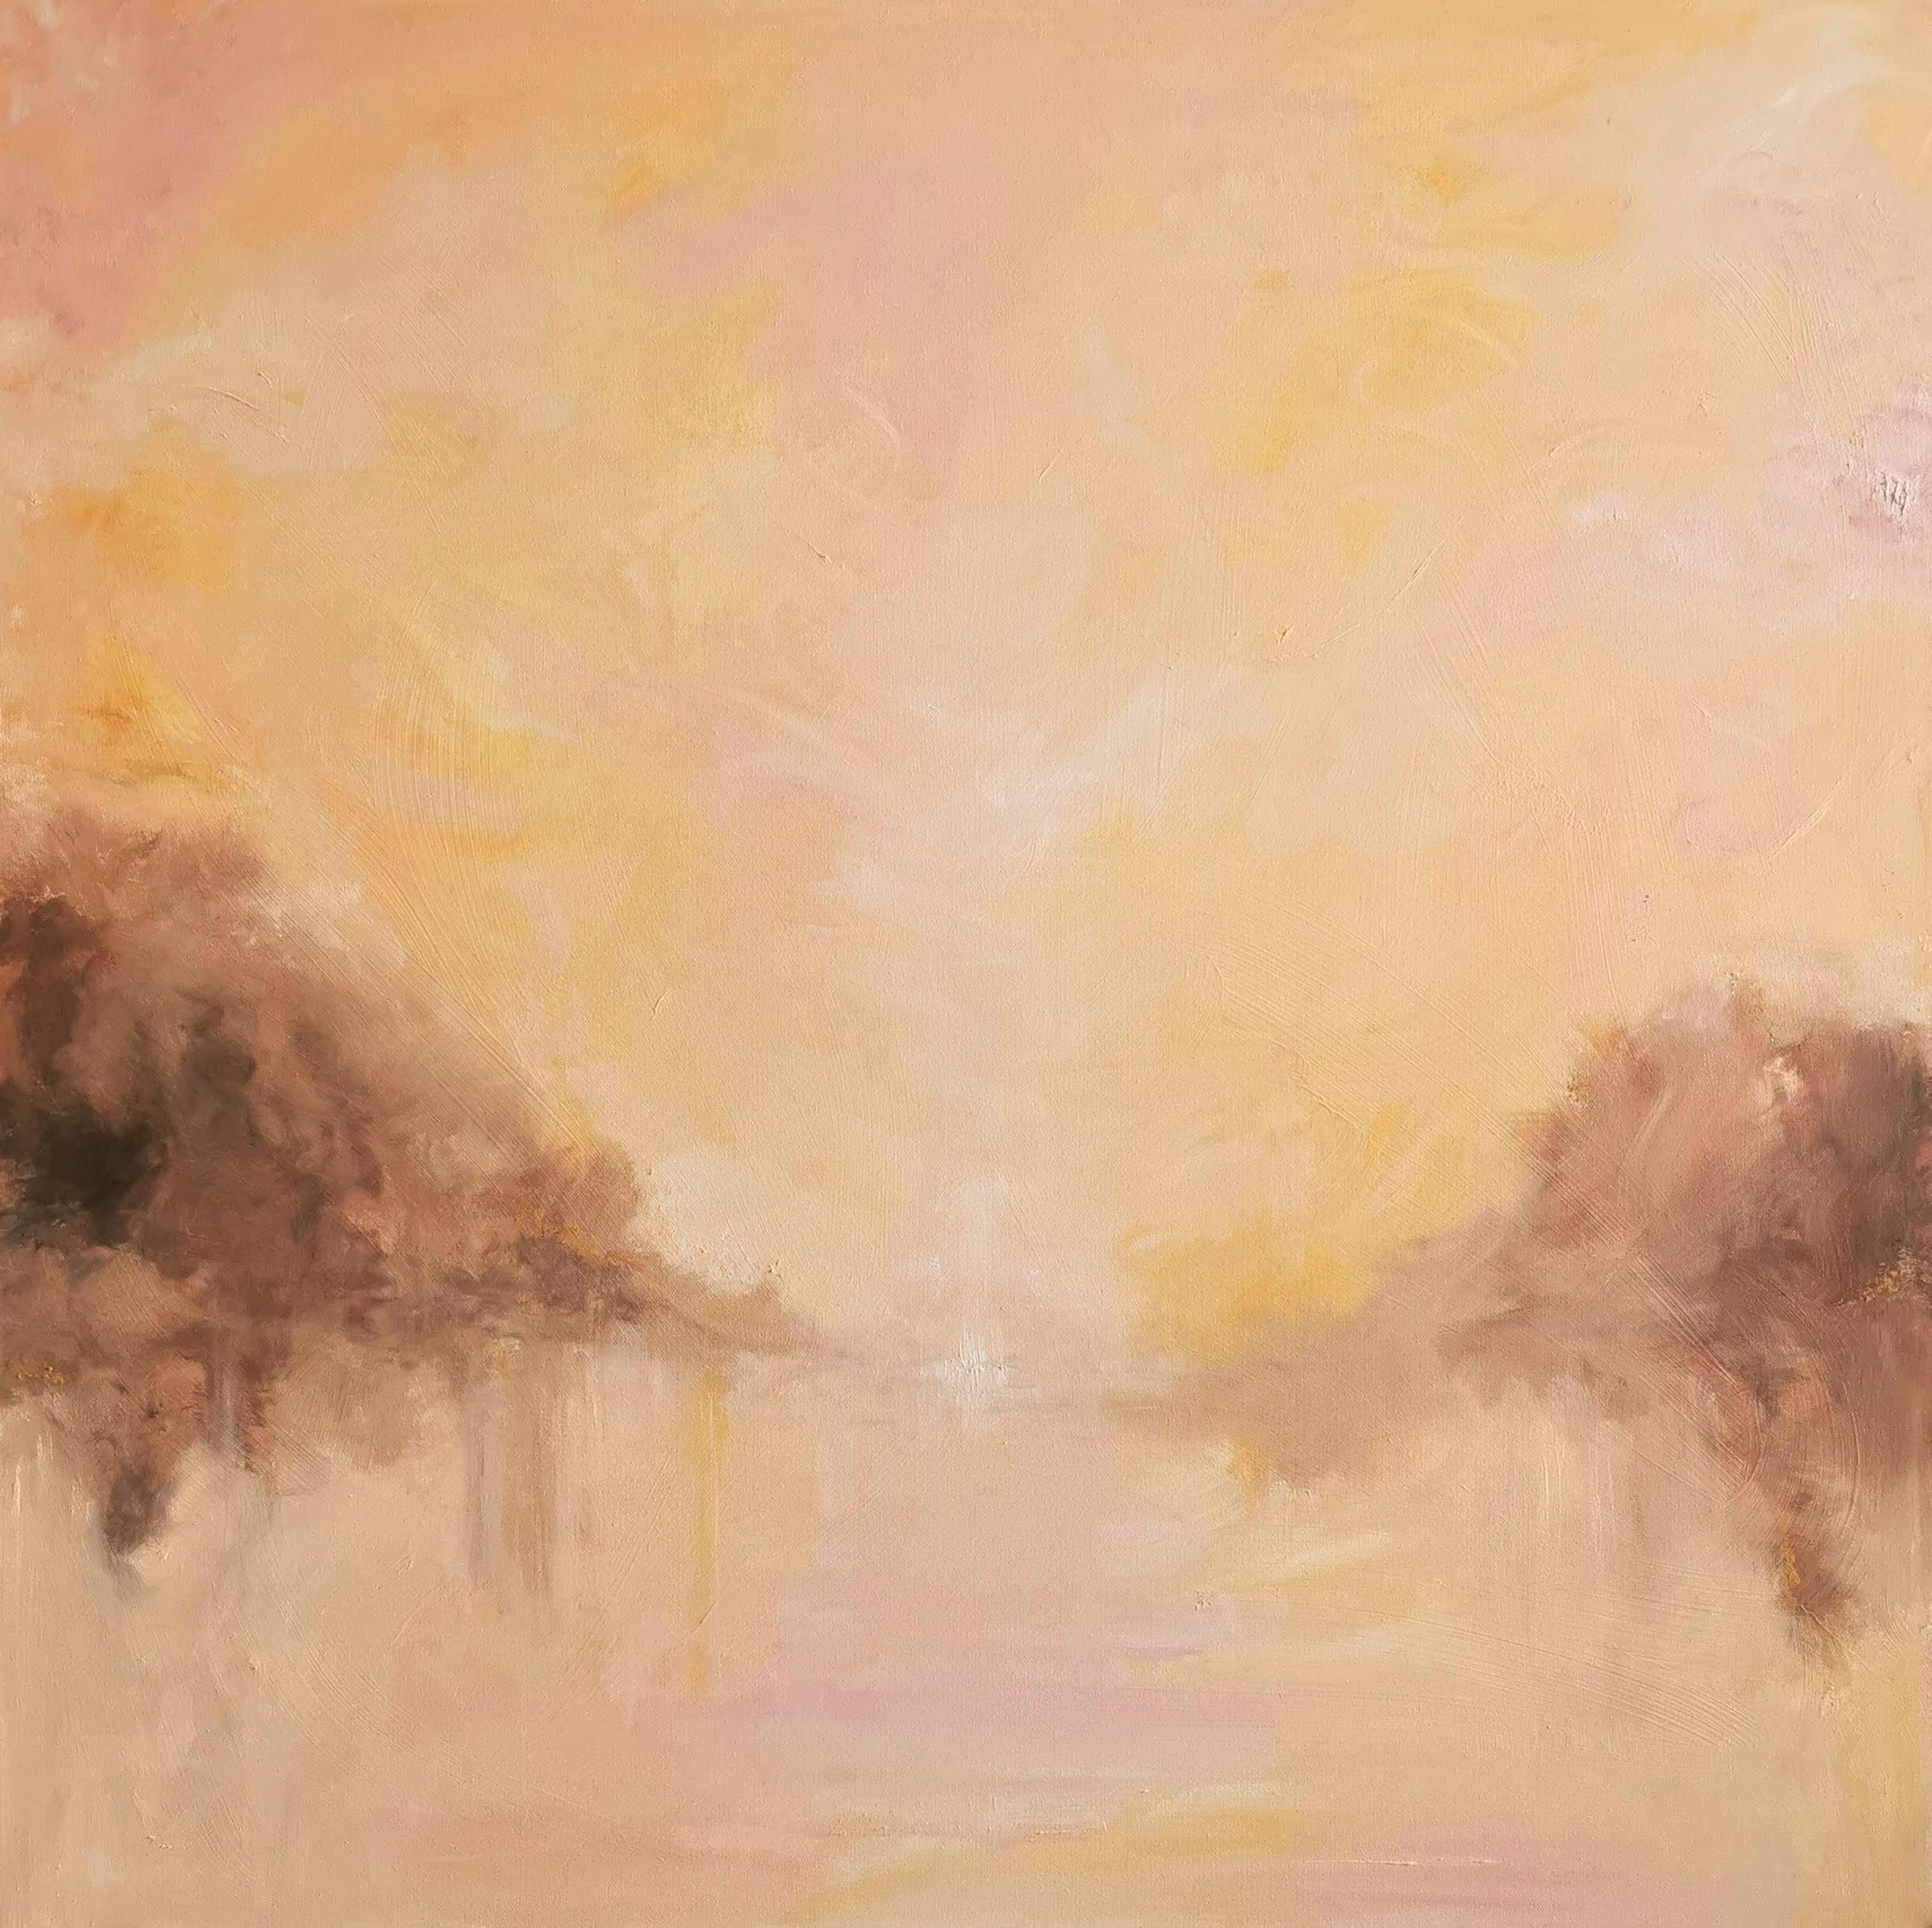 Jennifer L. Baker Landscape Painting - Grand rising - Large peach fuzz color abstract landscape painting